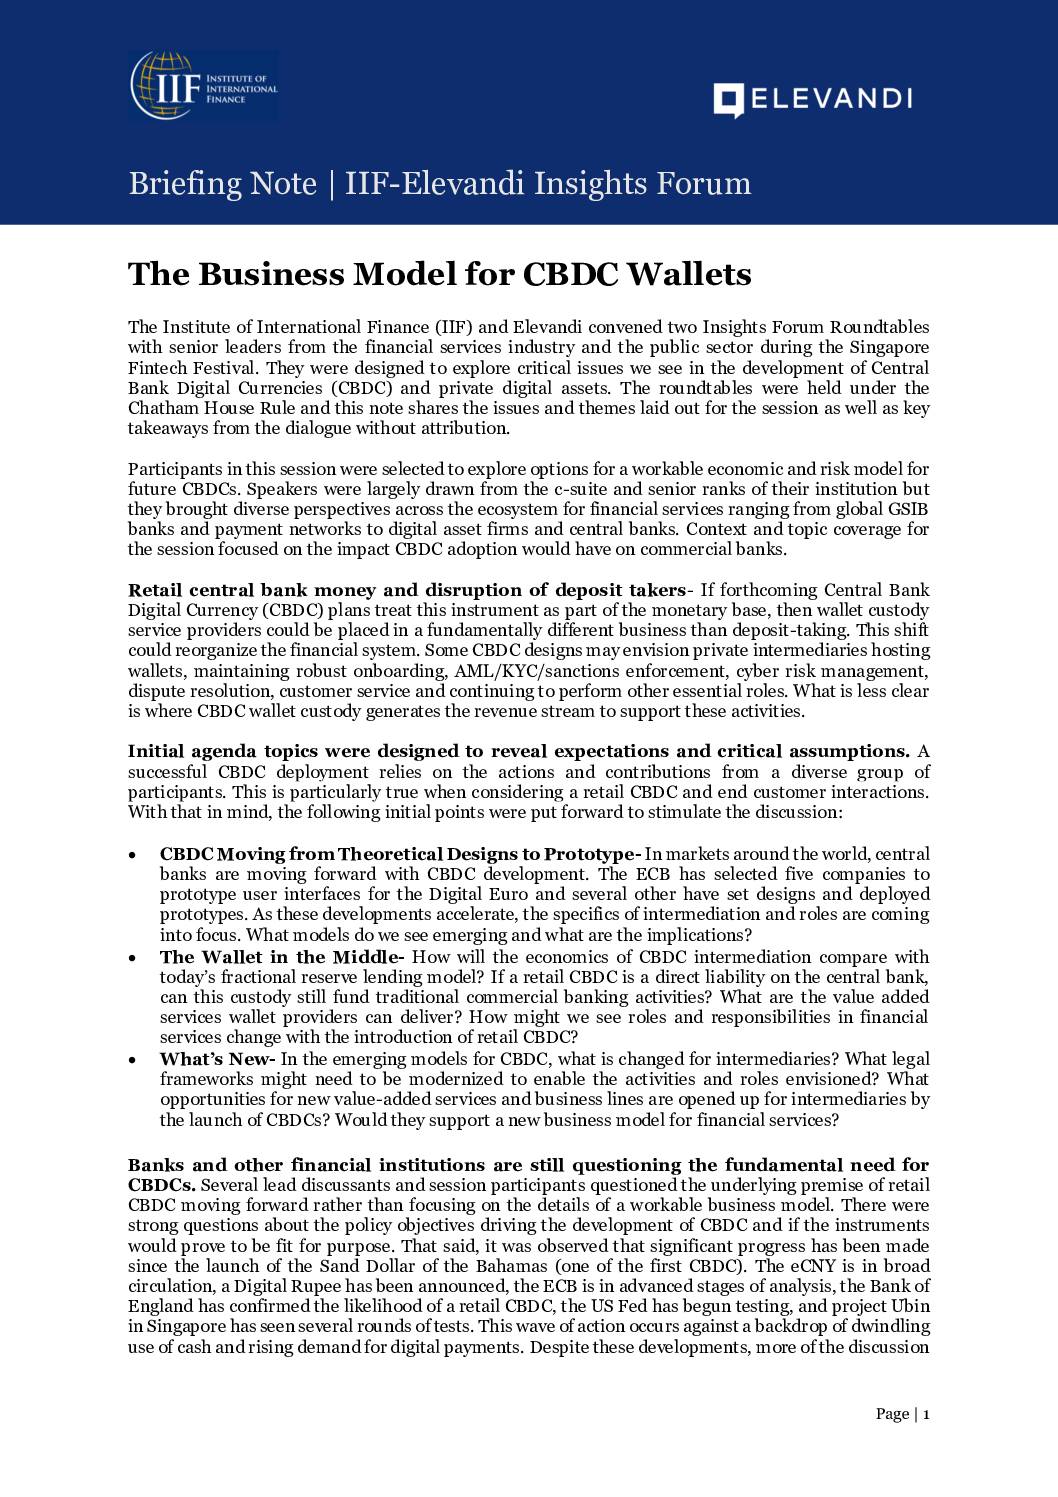 Institute-of-International-Finance-The-Business-Model-for-CBDC-Wallets-pdf